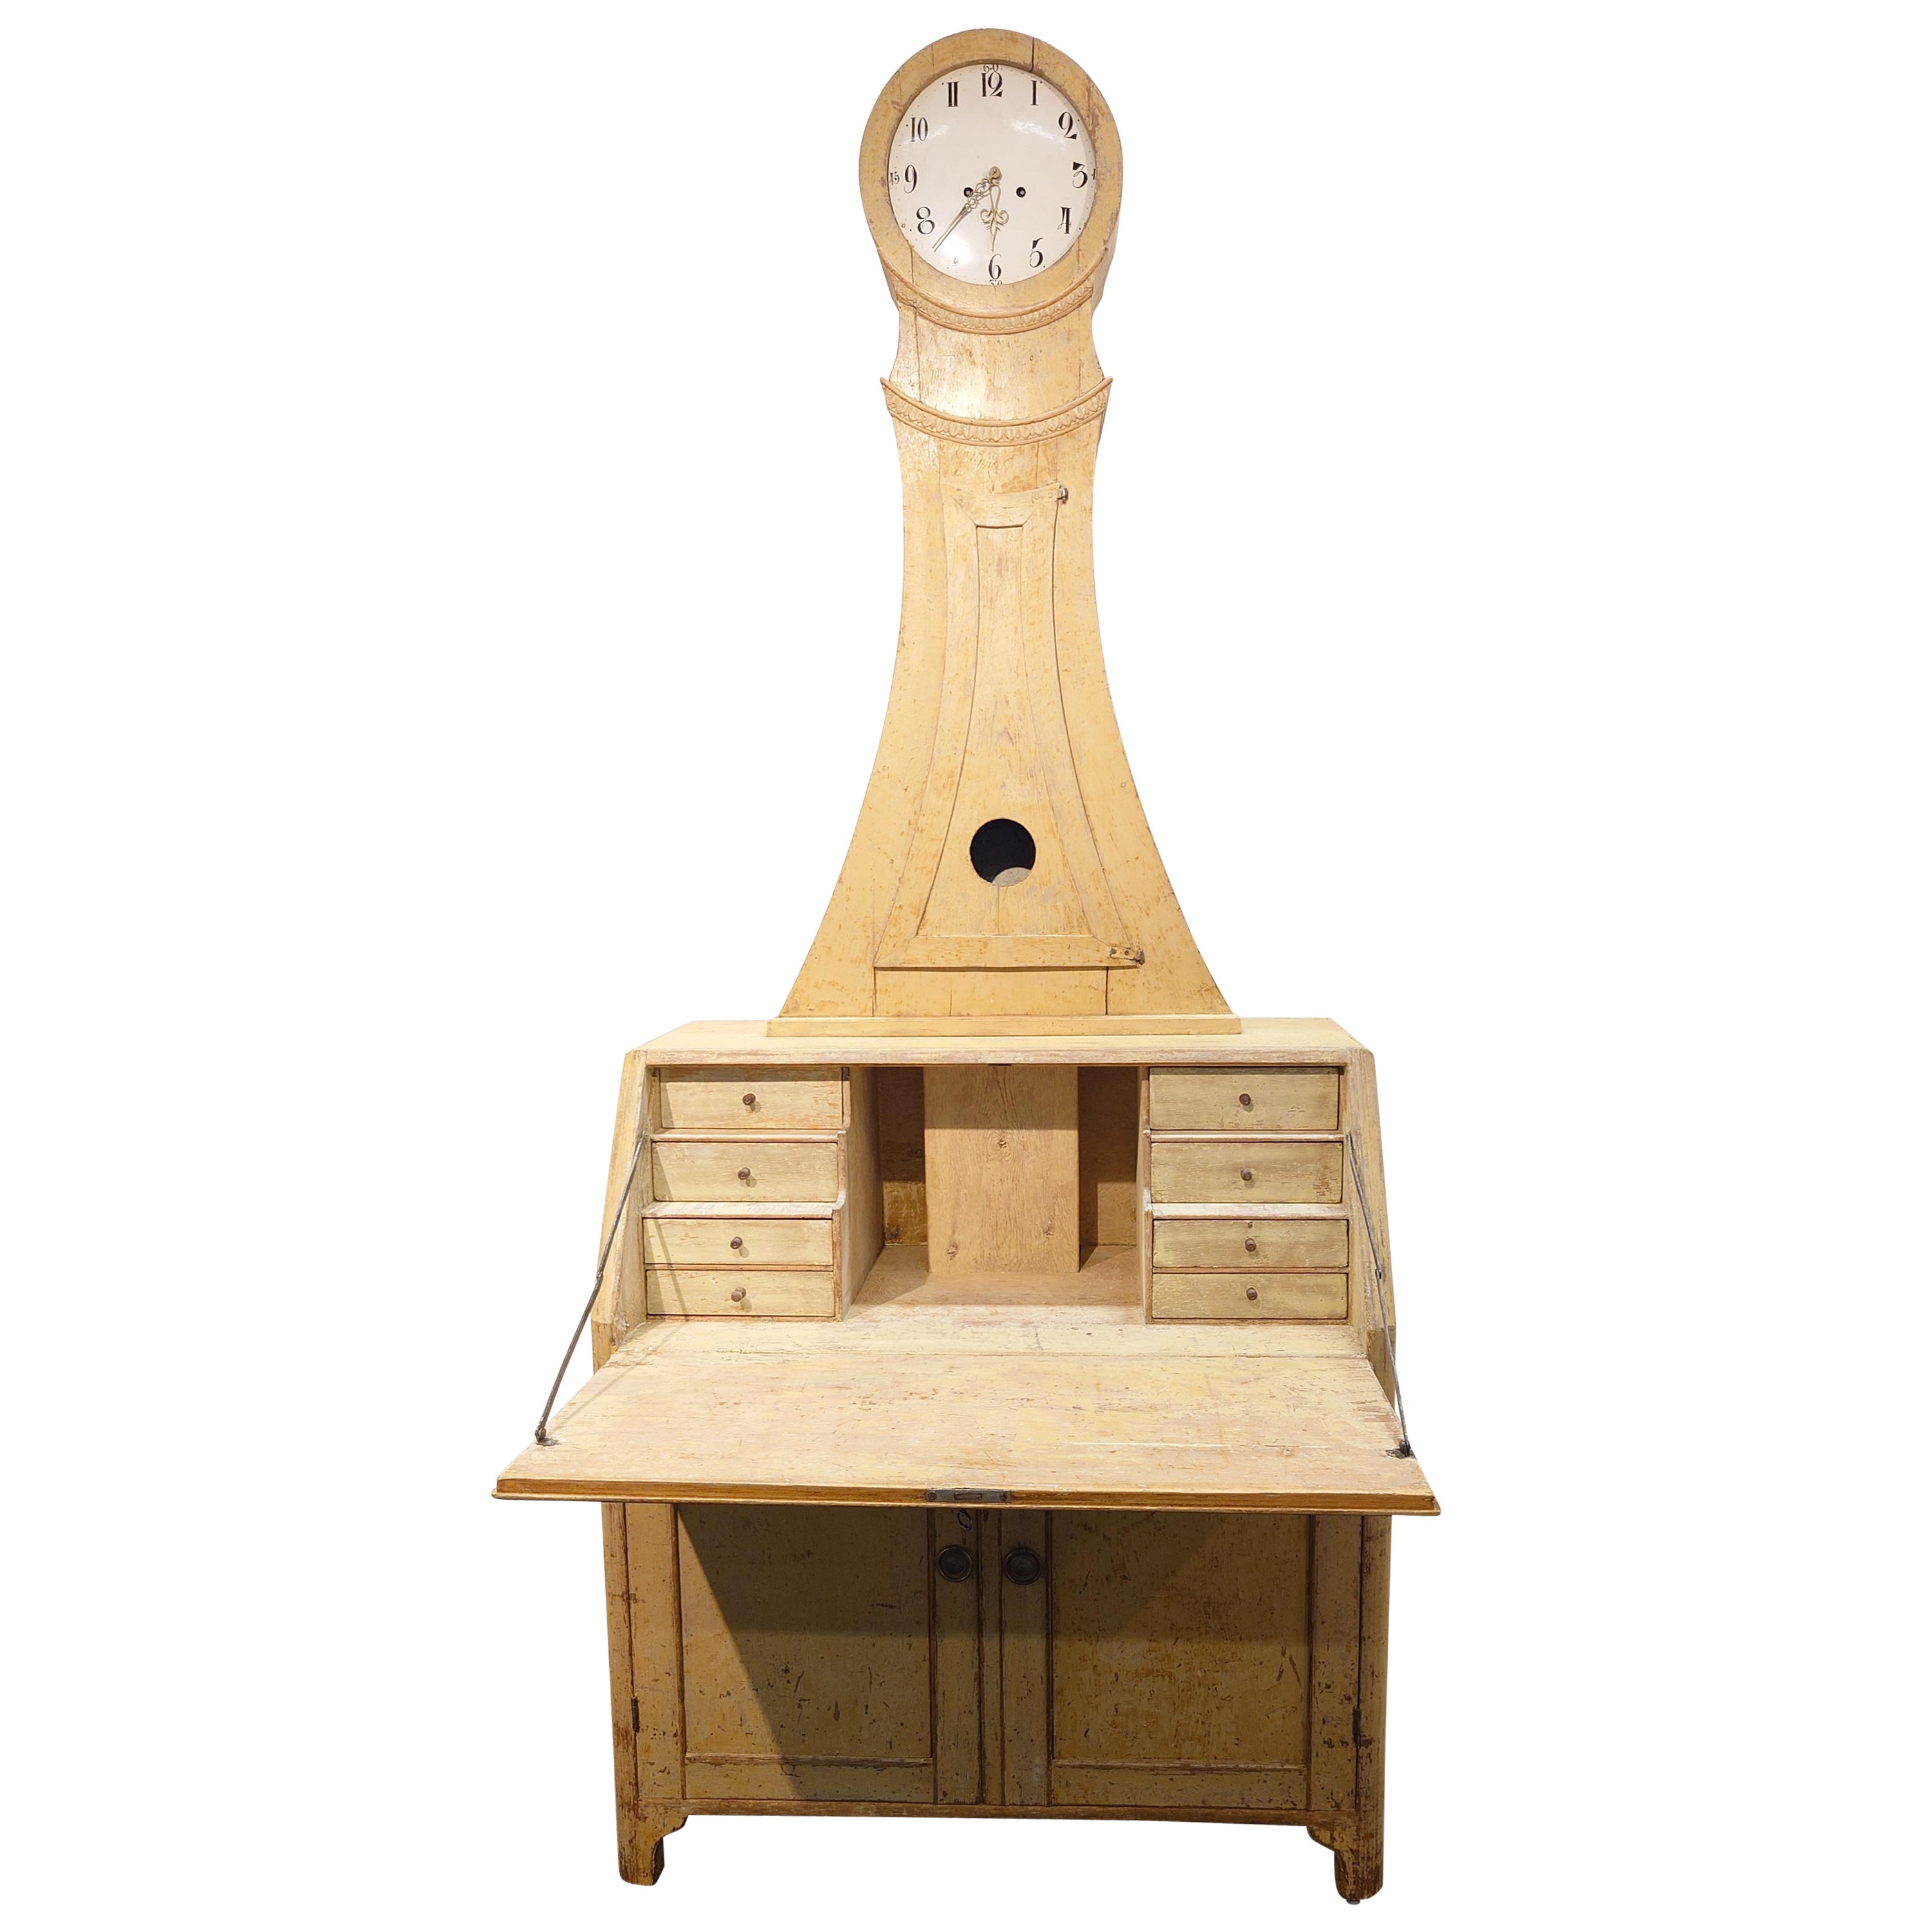  19th Century Rare antique Northern Swedish  pine Secretary clock desk  country